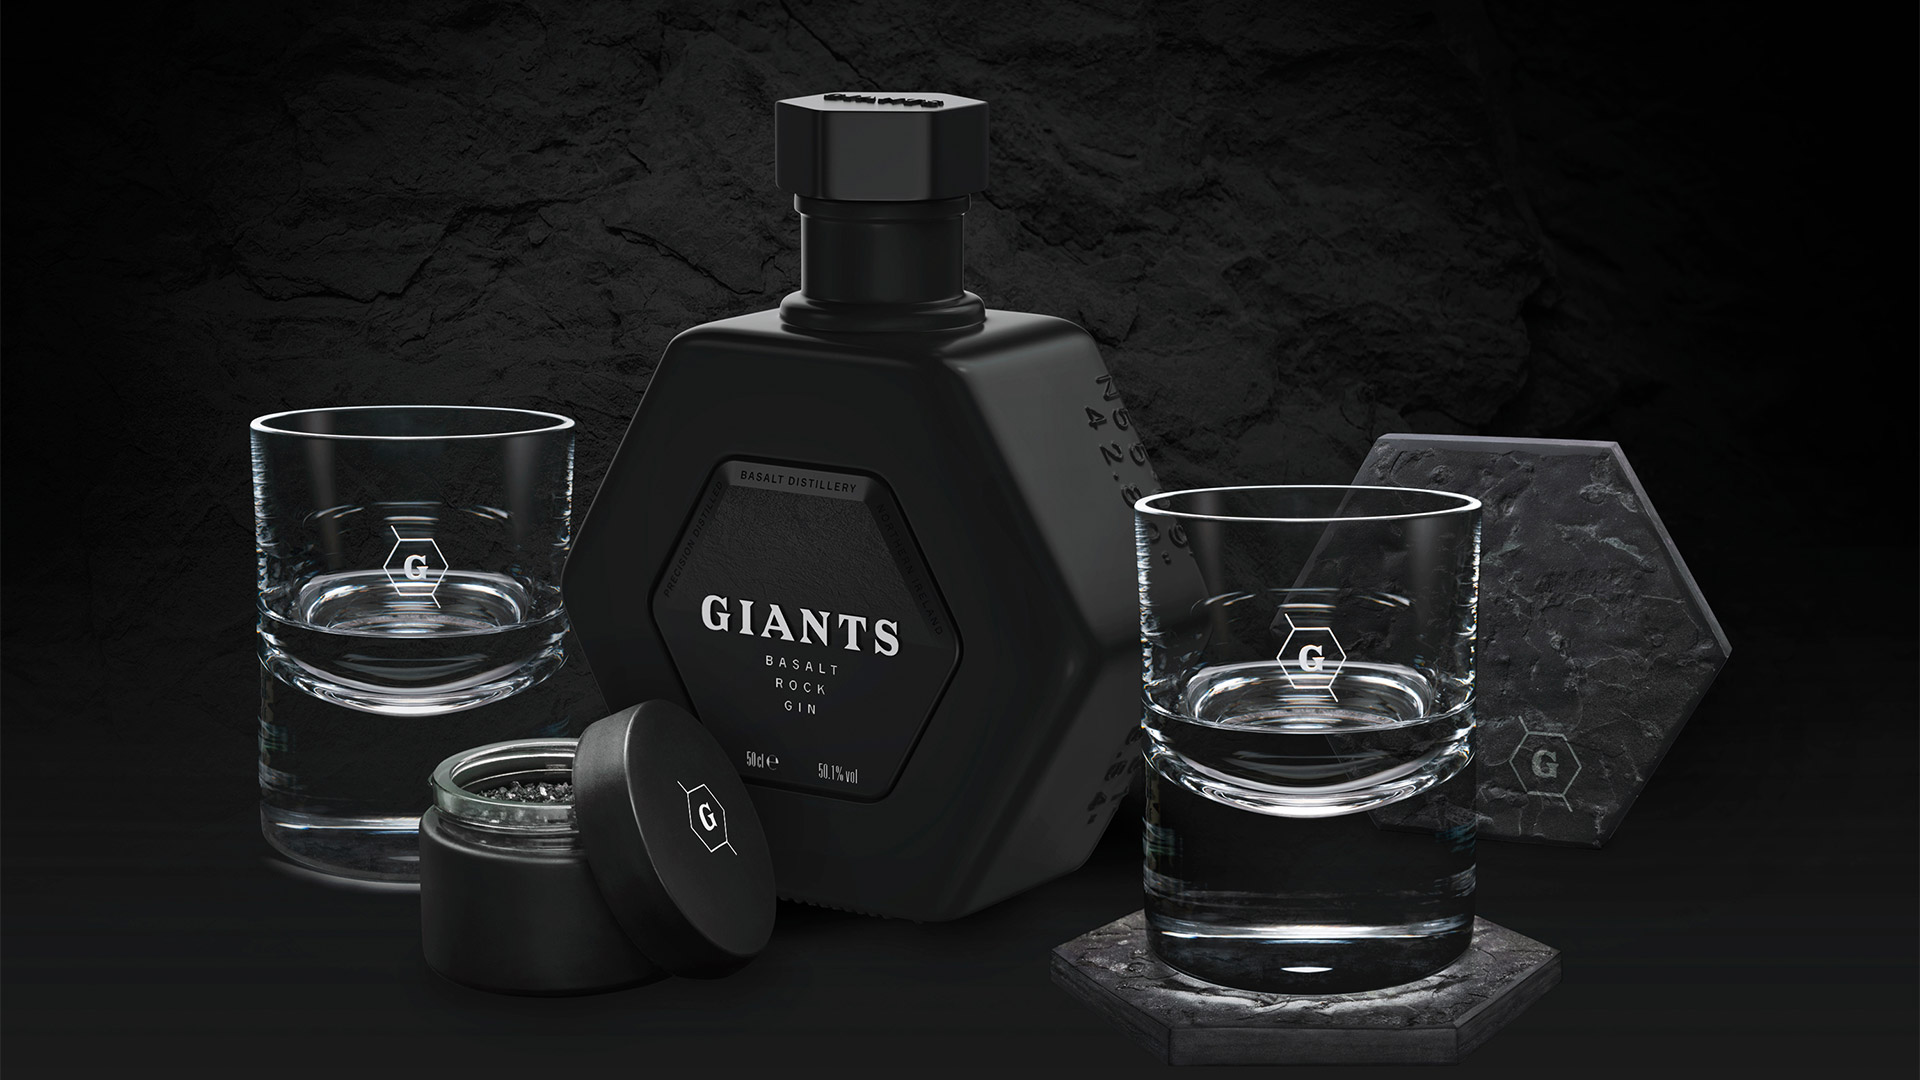 Giants Basalt Rock Gin Gift Set Products